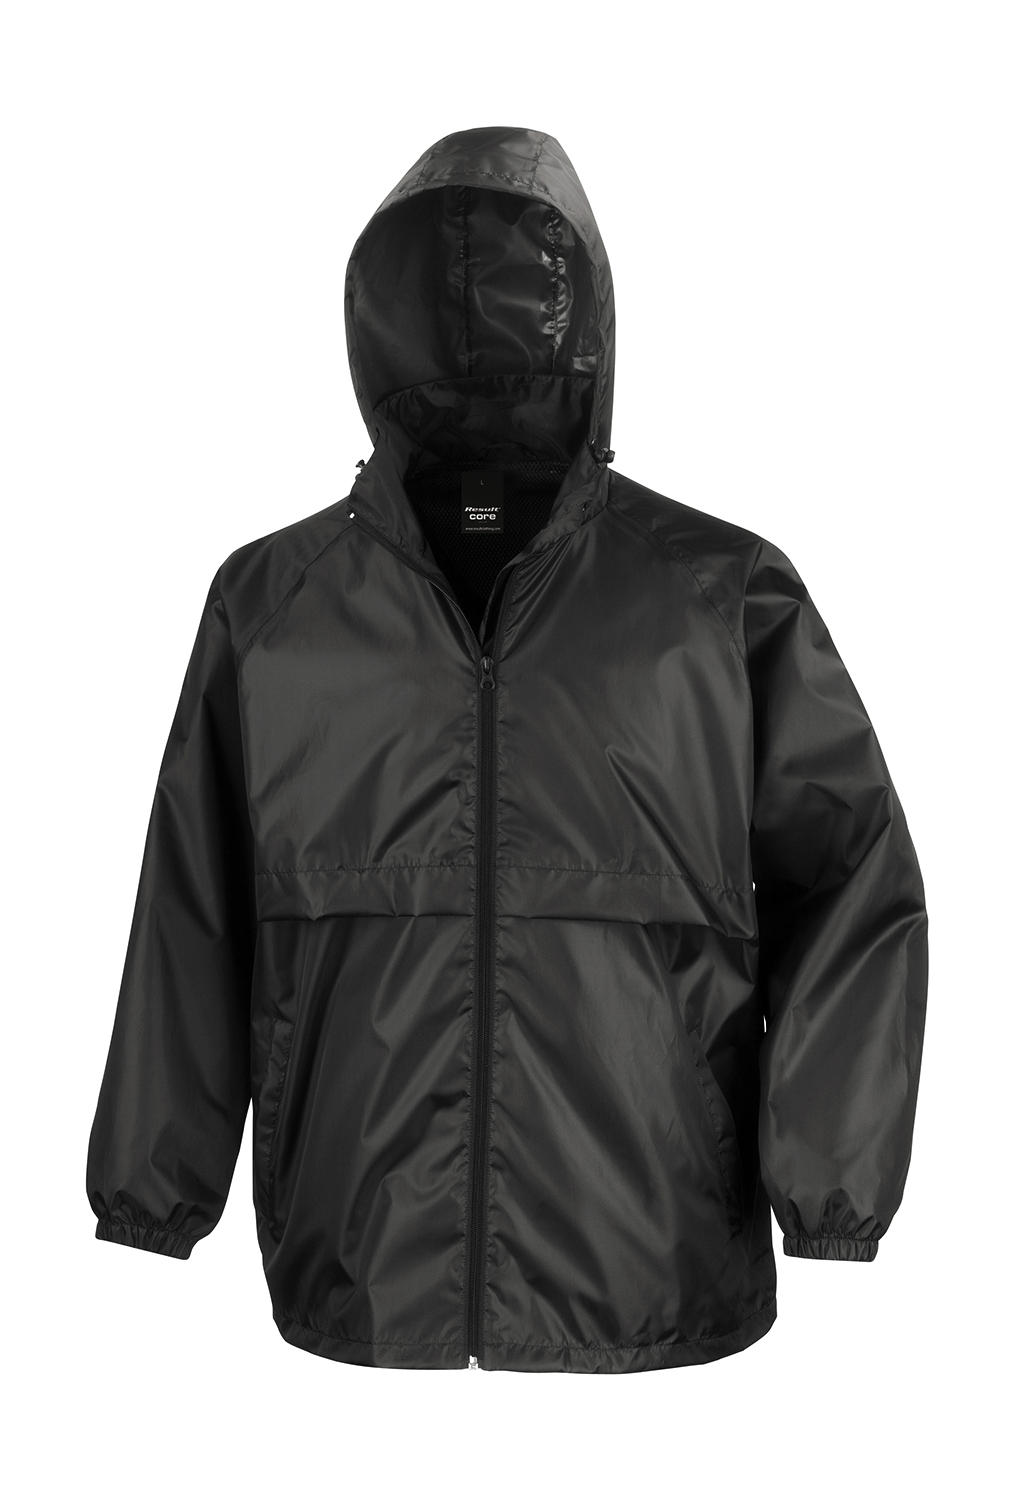  Lightweight Jacket in Farbe Black